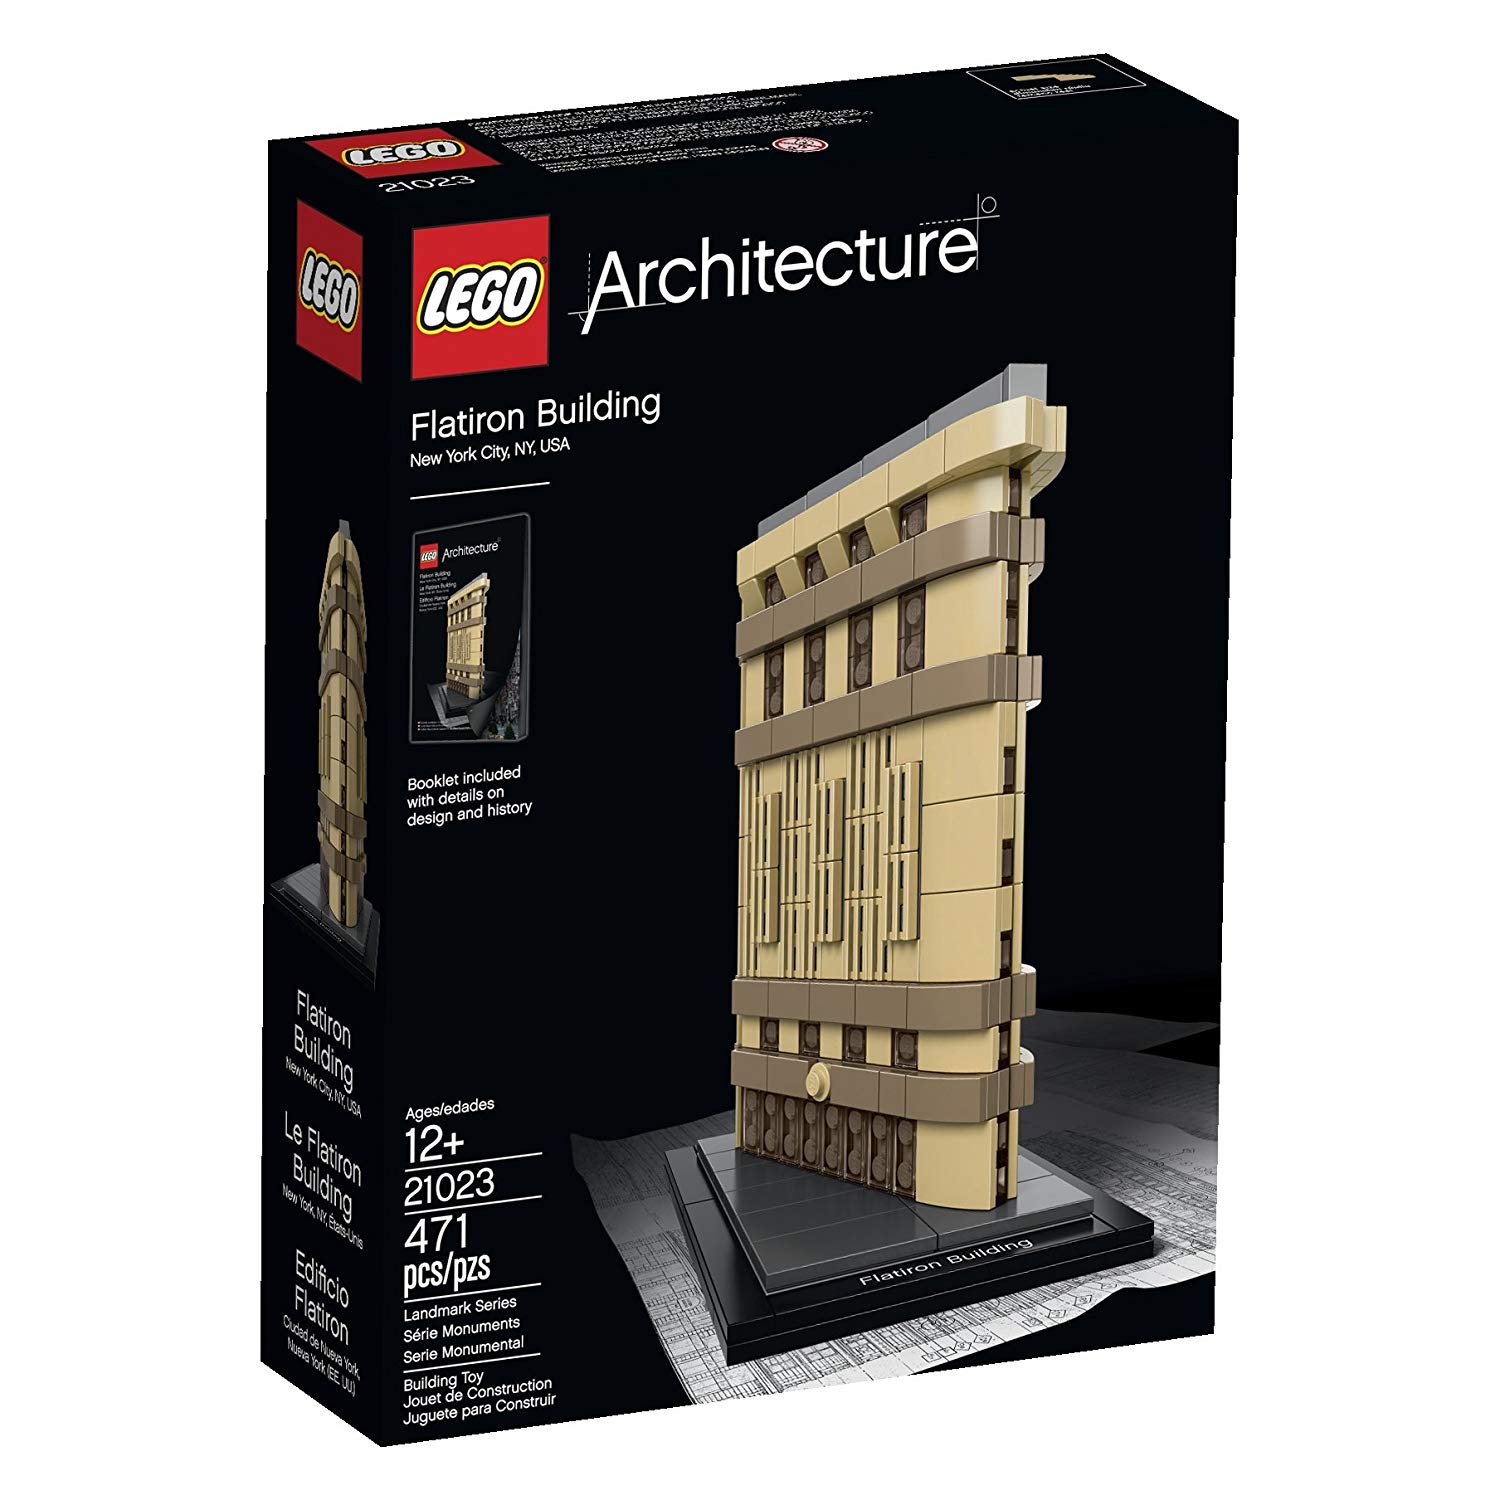 Lego Architecture Flatiron Building Building Kit By Lego